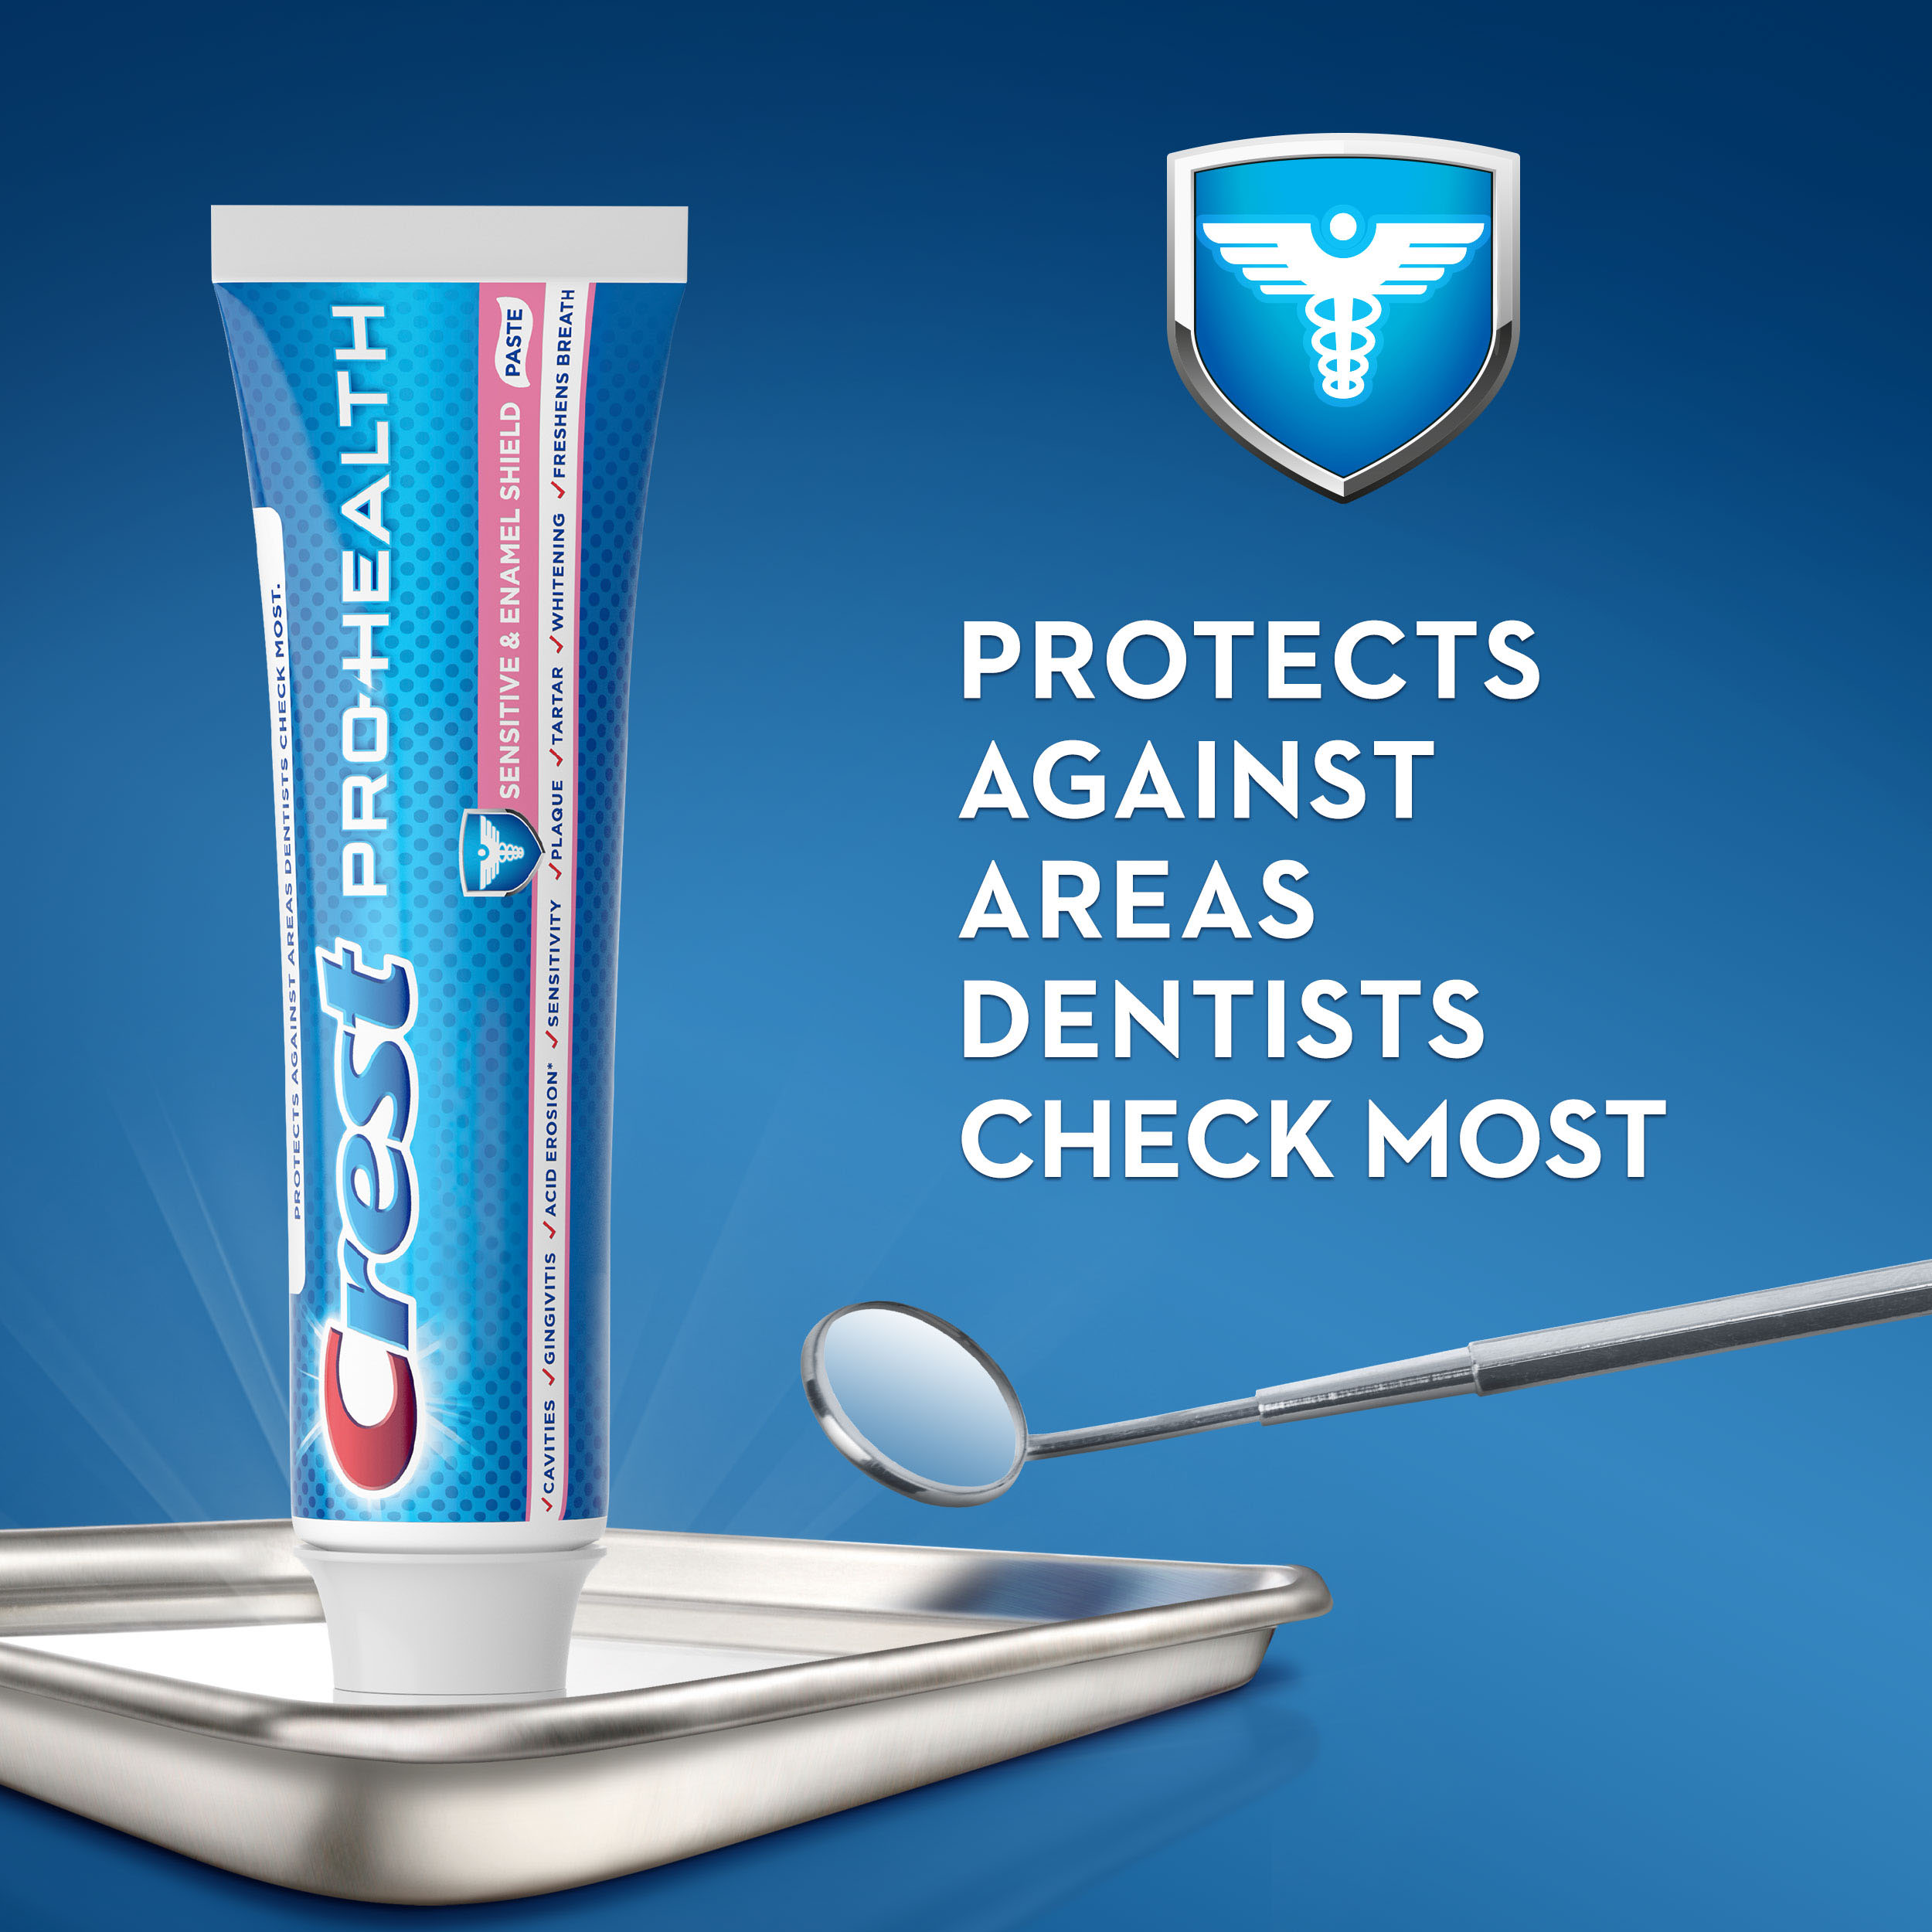 Crest Pro-Health Sensitive & Enamel Shield Toothpaste, 4.6 oz, Pack of 3 - image 4 of 7